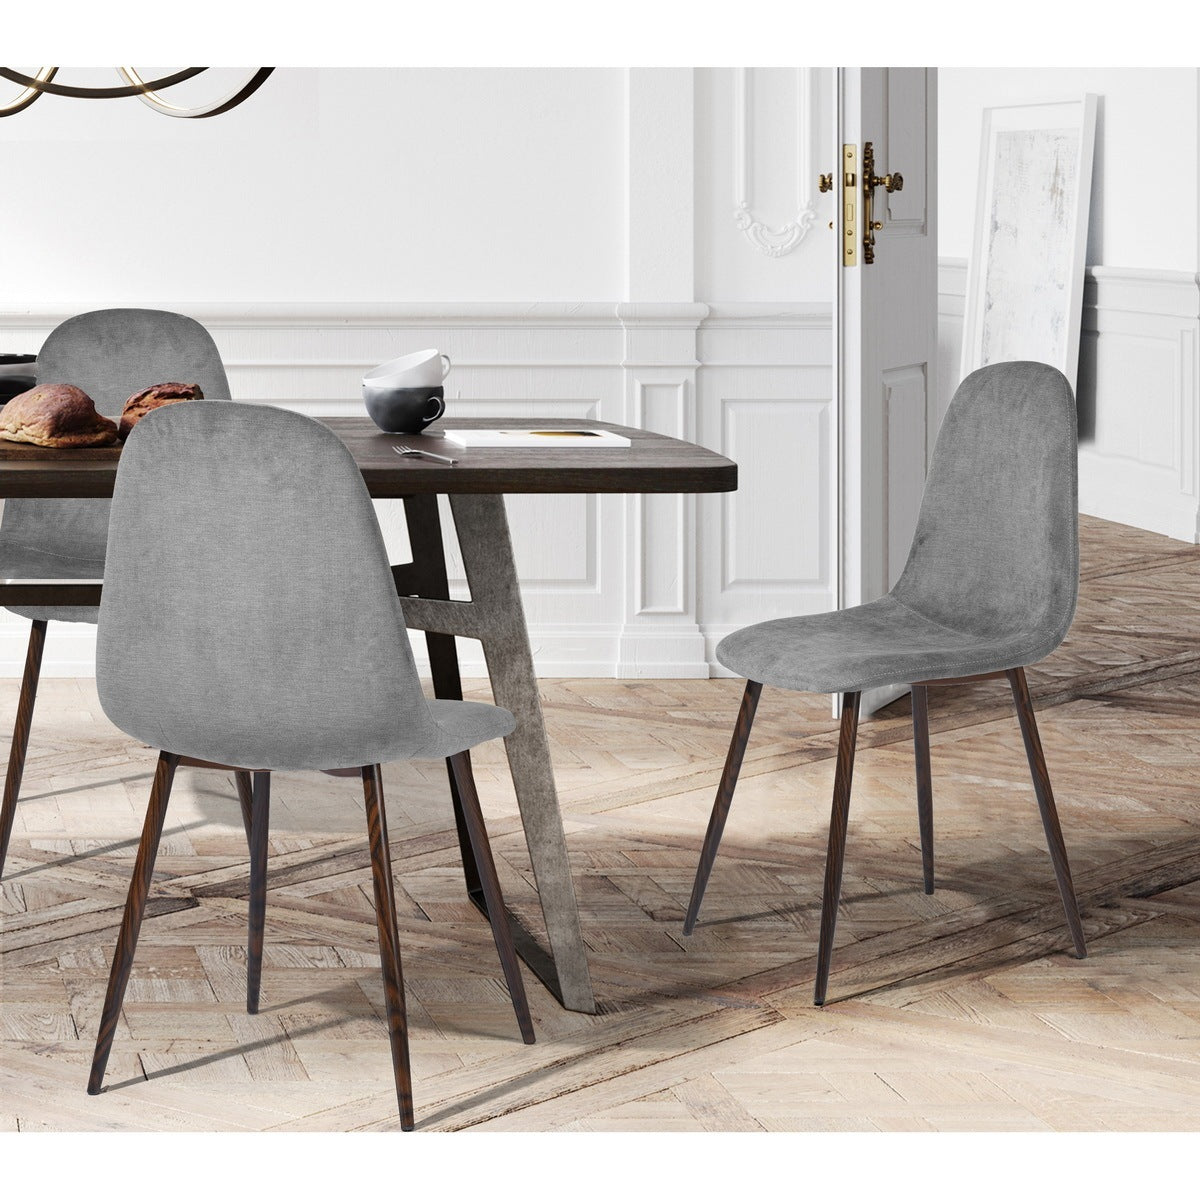 Set of 4 Scandinavian Velvet Dining Chairs, Light Grey